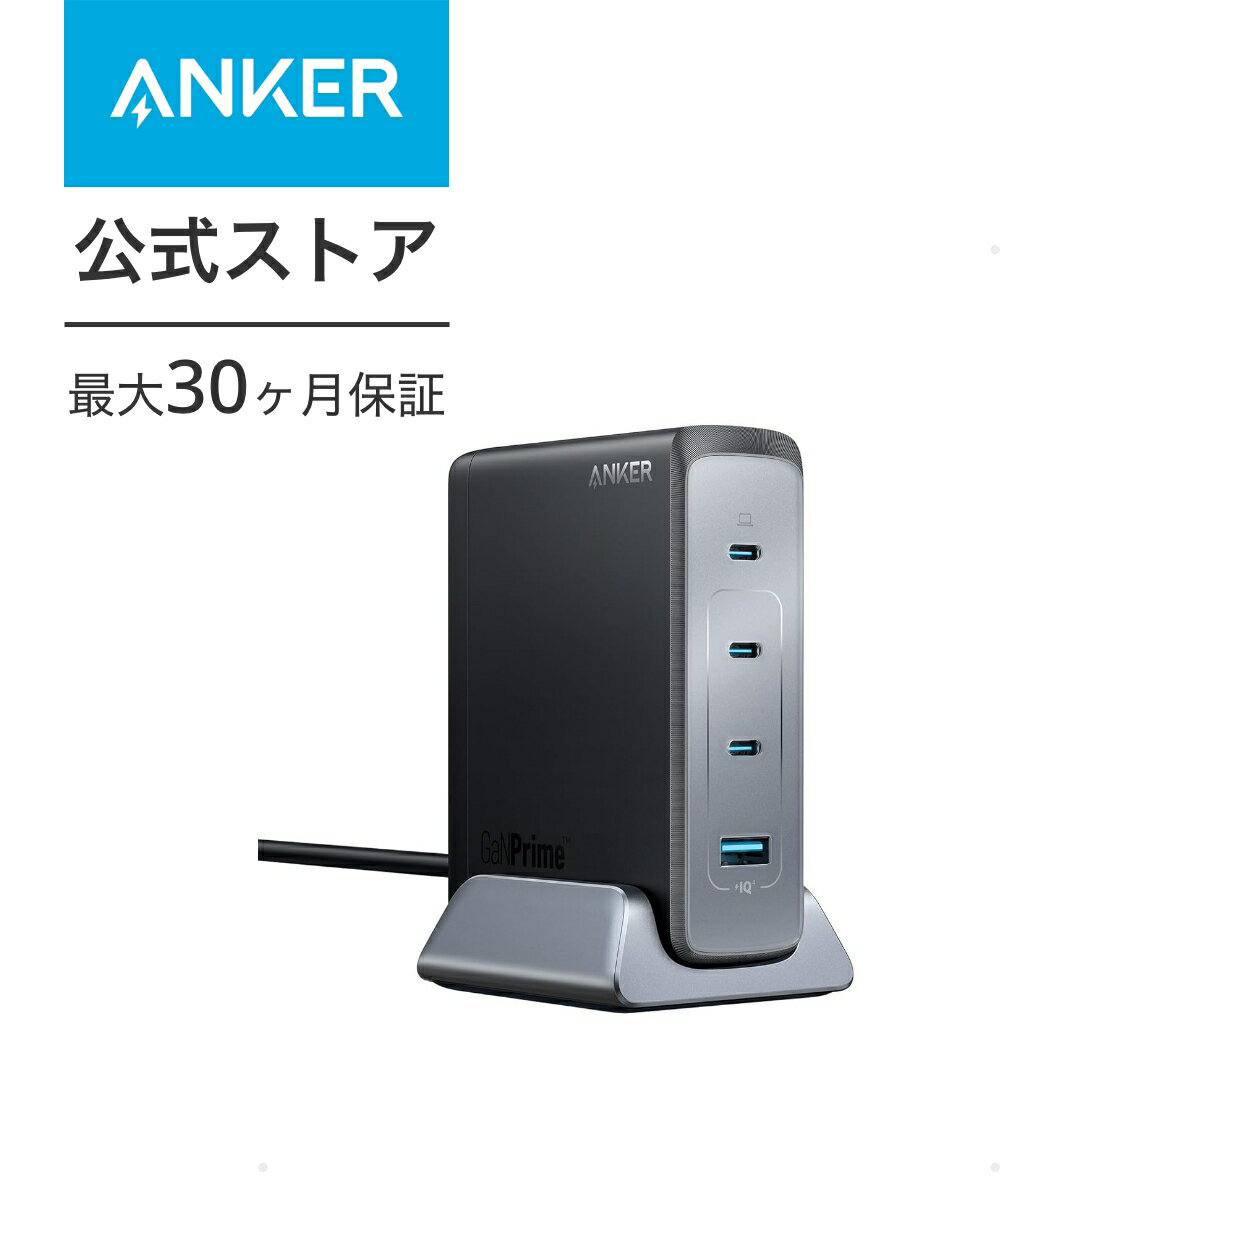 Anker Prime Desktop Charger (240W, 4 ports, GaN)(USB PD 充電器 USB-A & USB-C) iPad iPhone MacBook Android スマートフォン ノートPC 各種 その他機器対応 (ブラック)